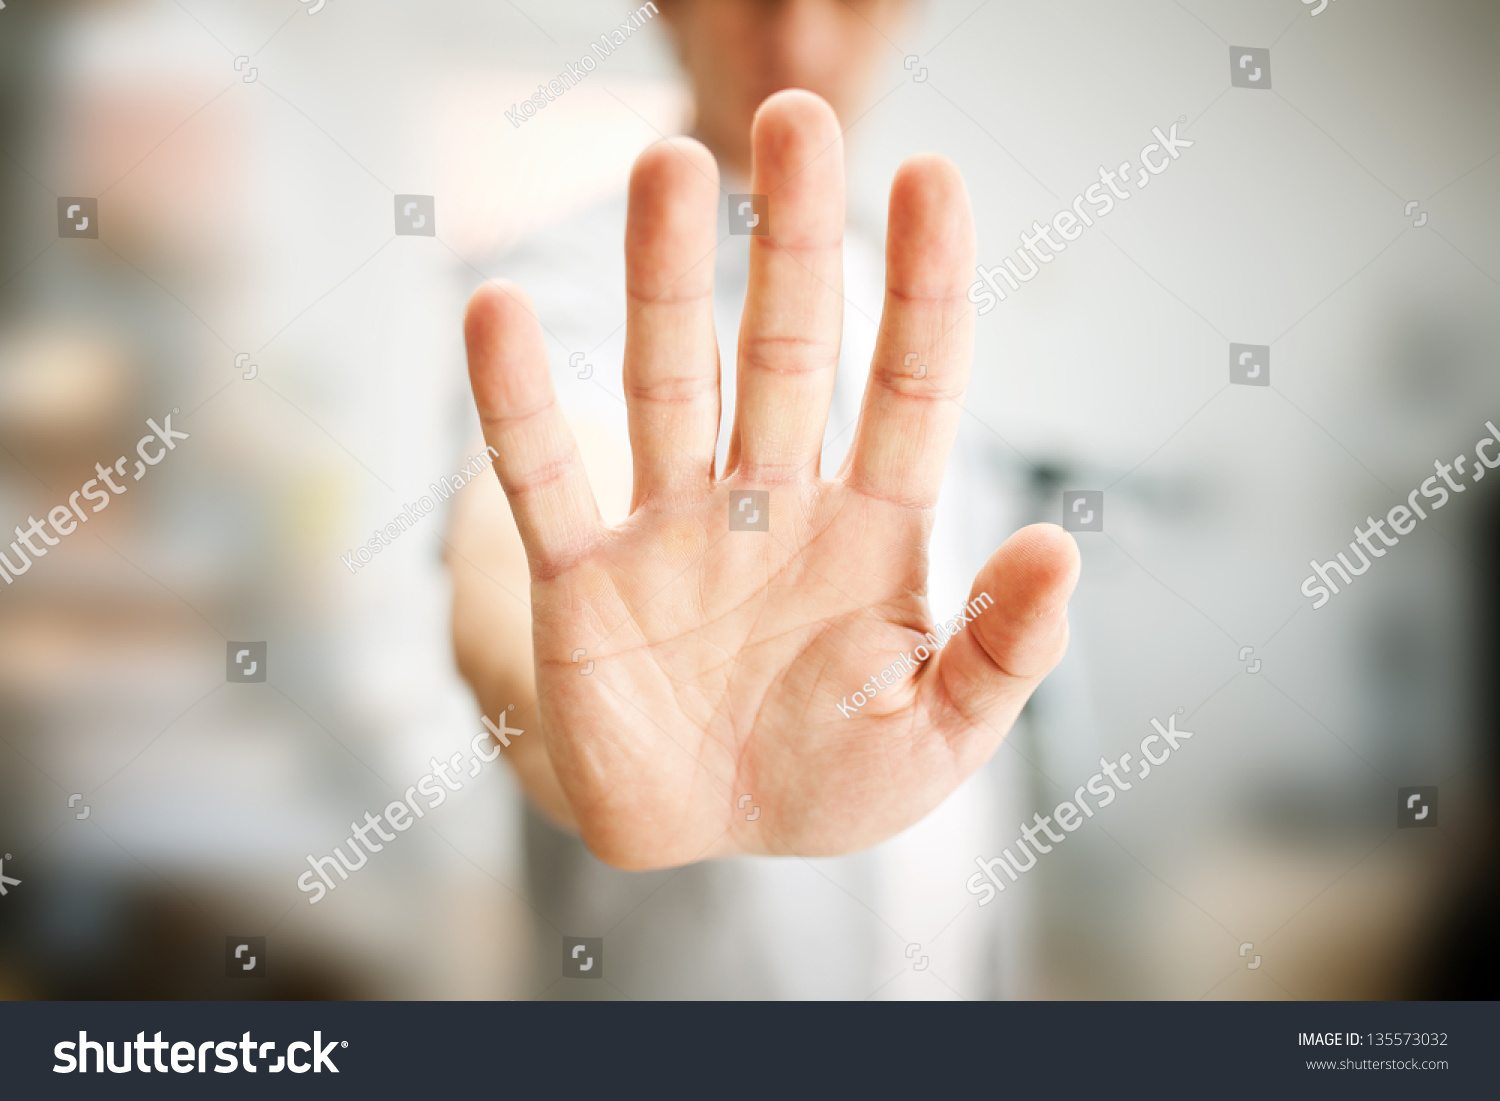 Man showing stop gesture #135573032